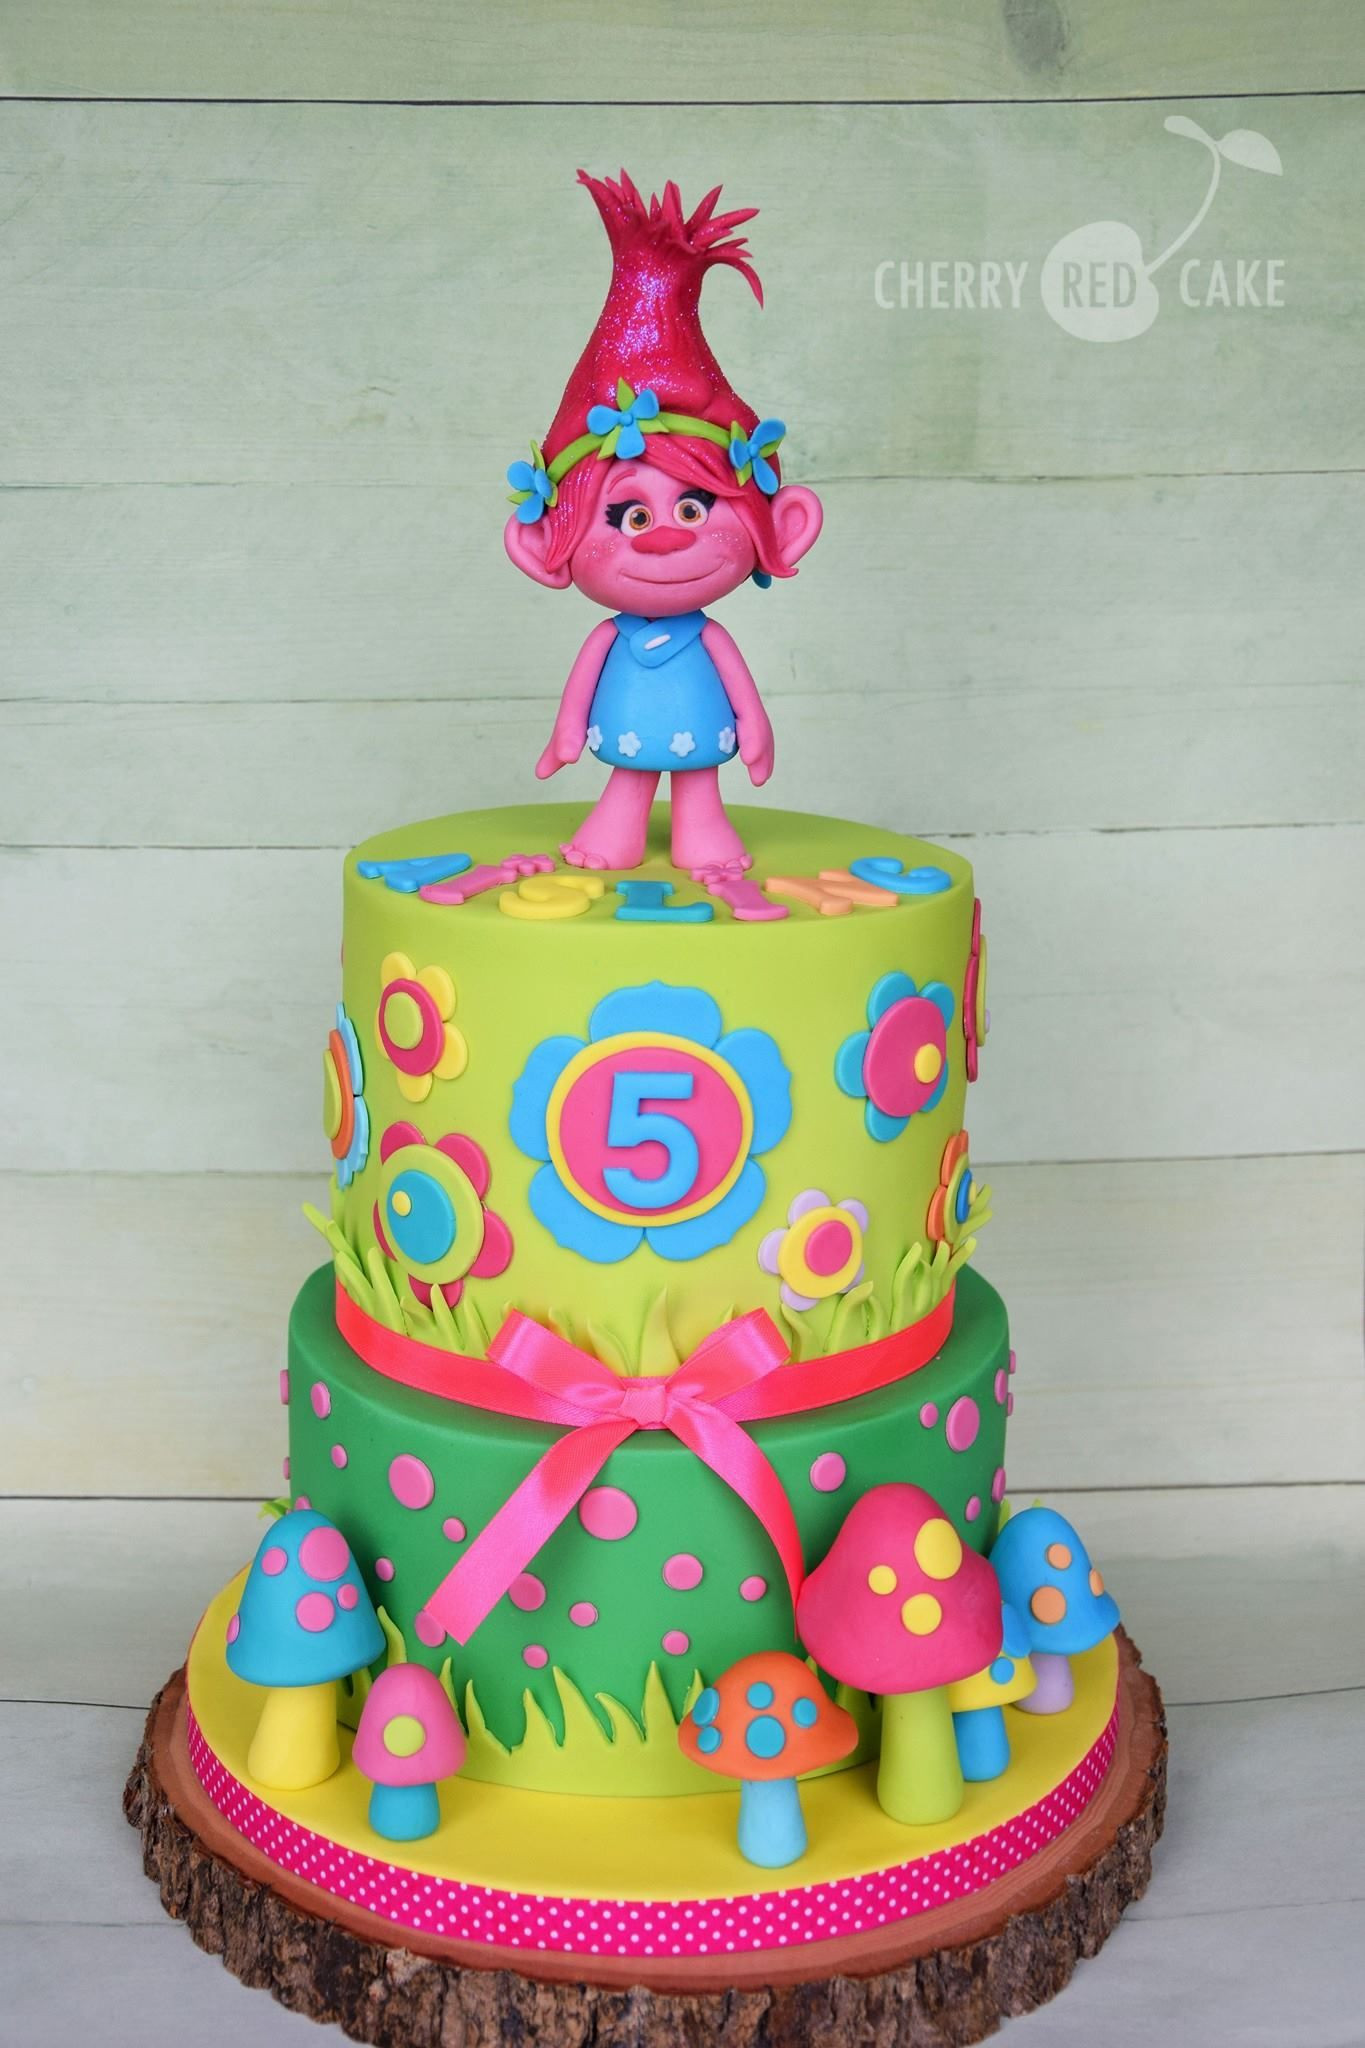 Best ideas about Trolls Birthday Cake Ideas
. Save or Pin trolls cake Celebration Cakes Pinterest Now.